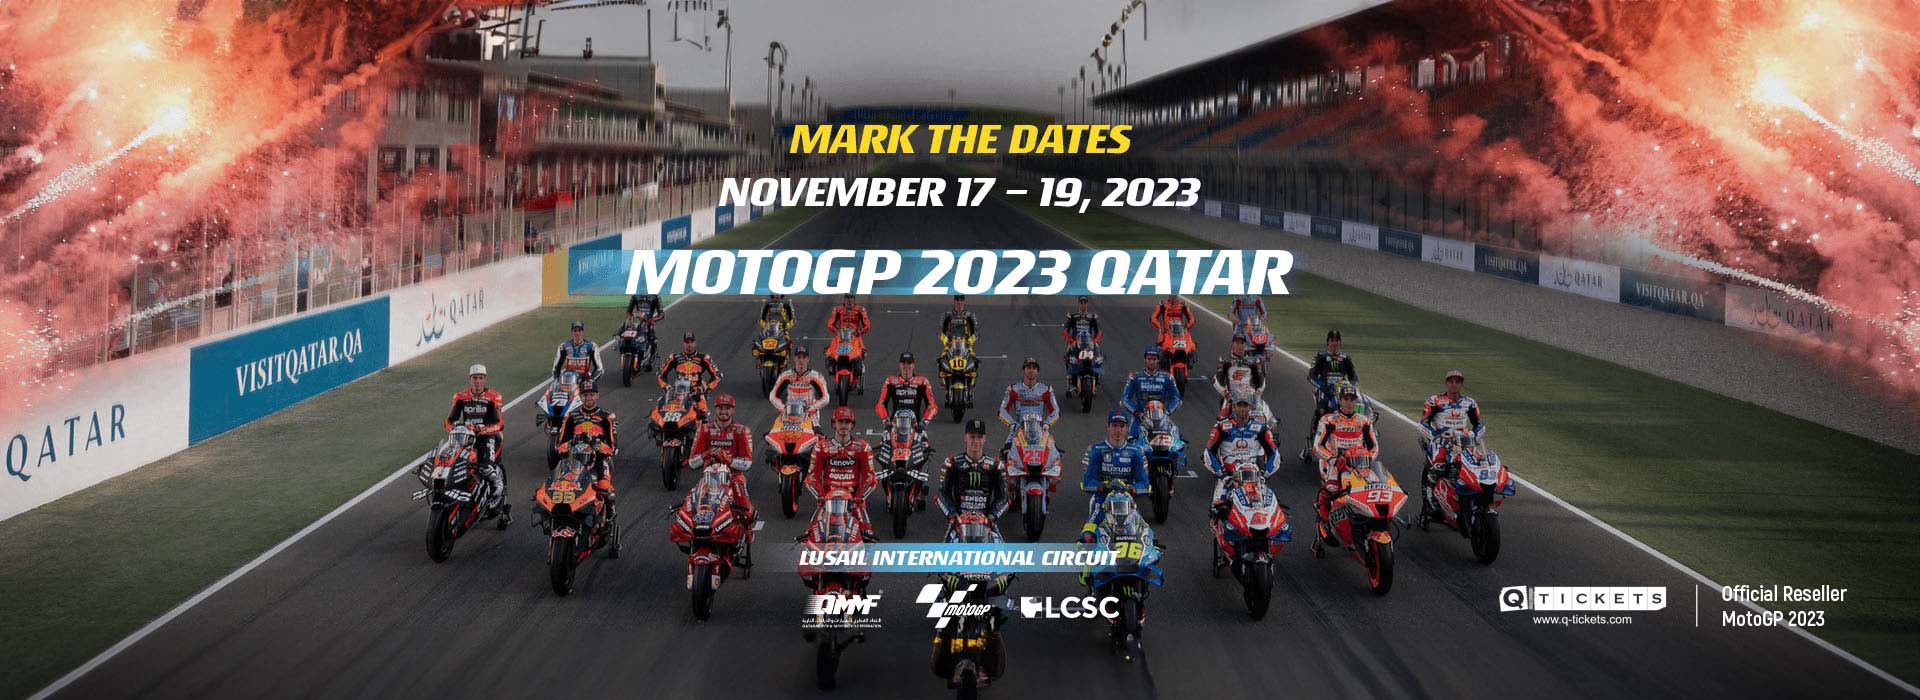 MOTOGP Grand Prix of Qatar 2023